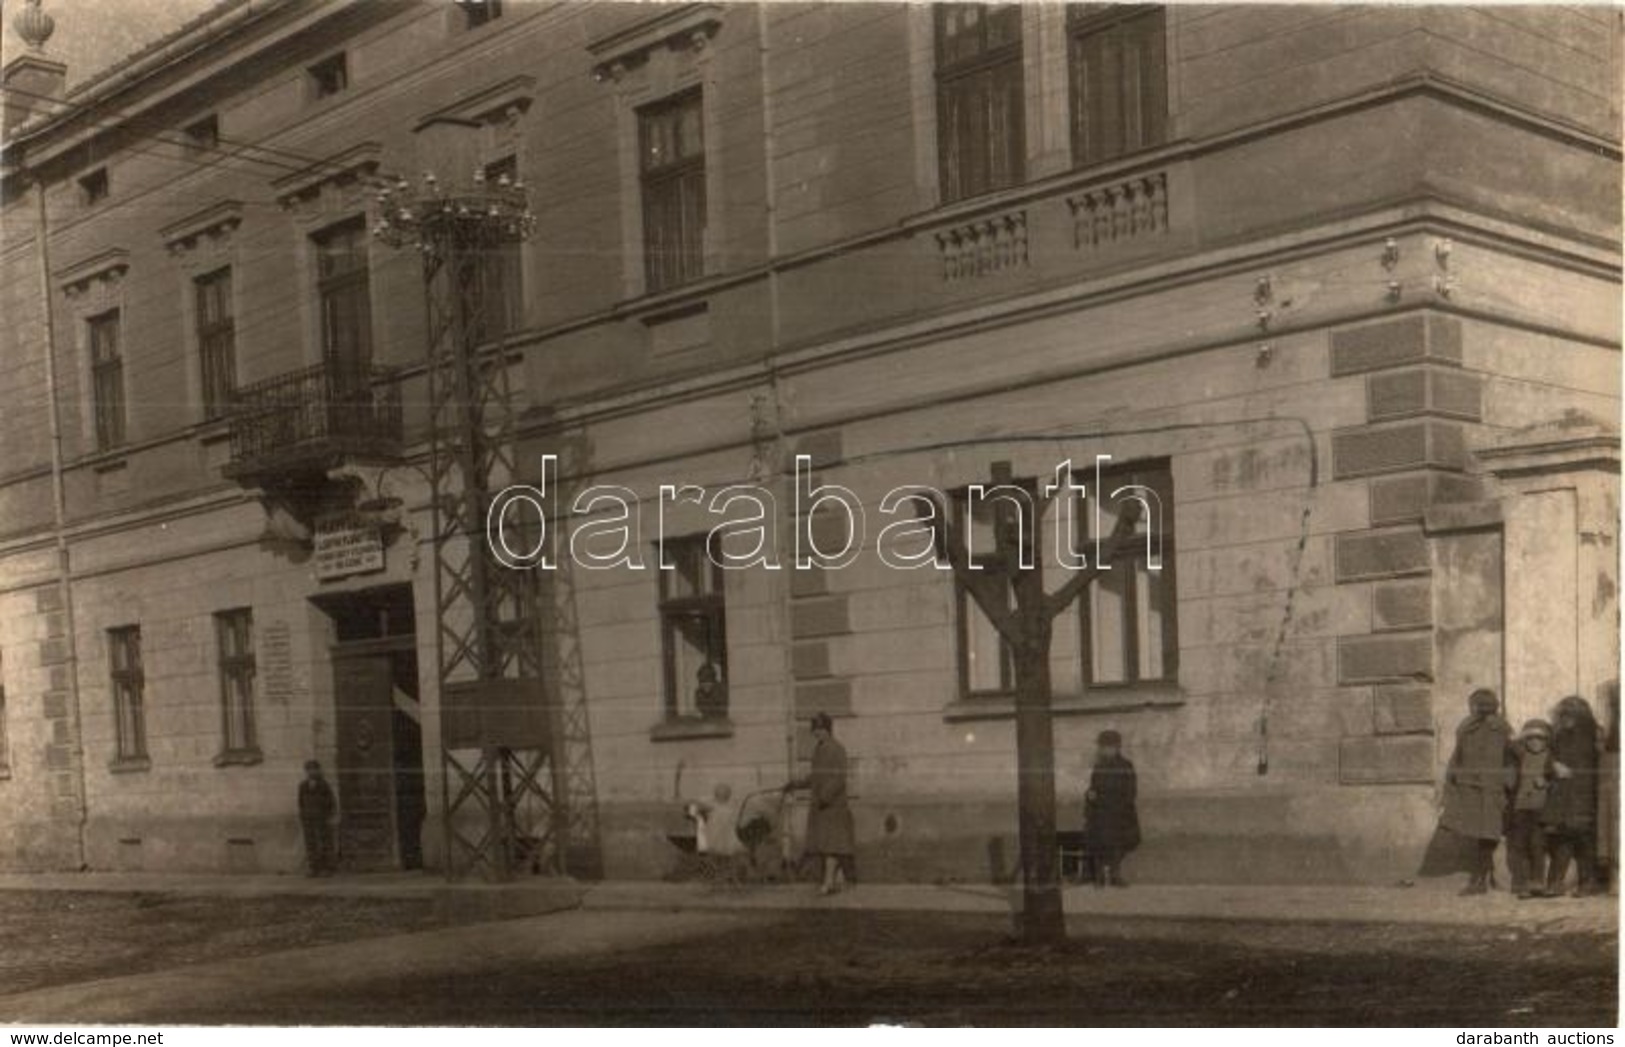 * T2 1927 Beregszász, Berehove; Ludvik Pluhovsky úri Szabó üzlete / Street View, Tailor Shop. Photo - Unclassified